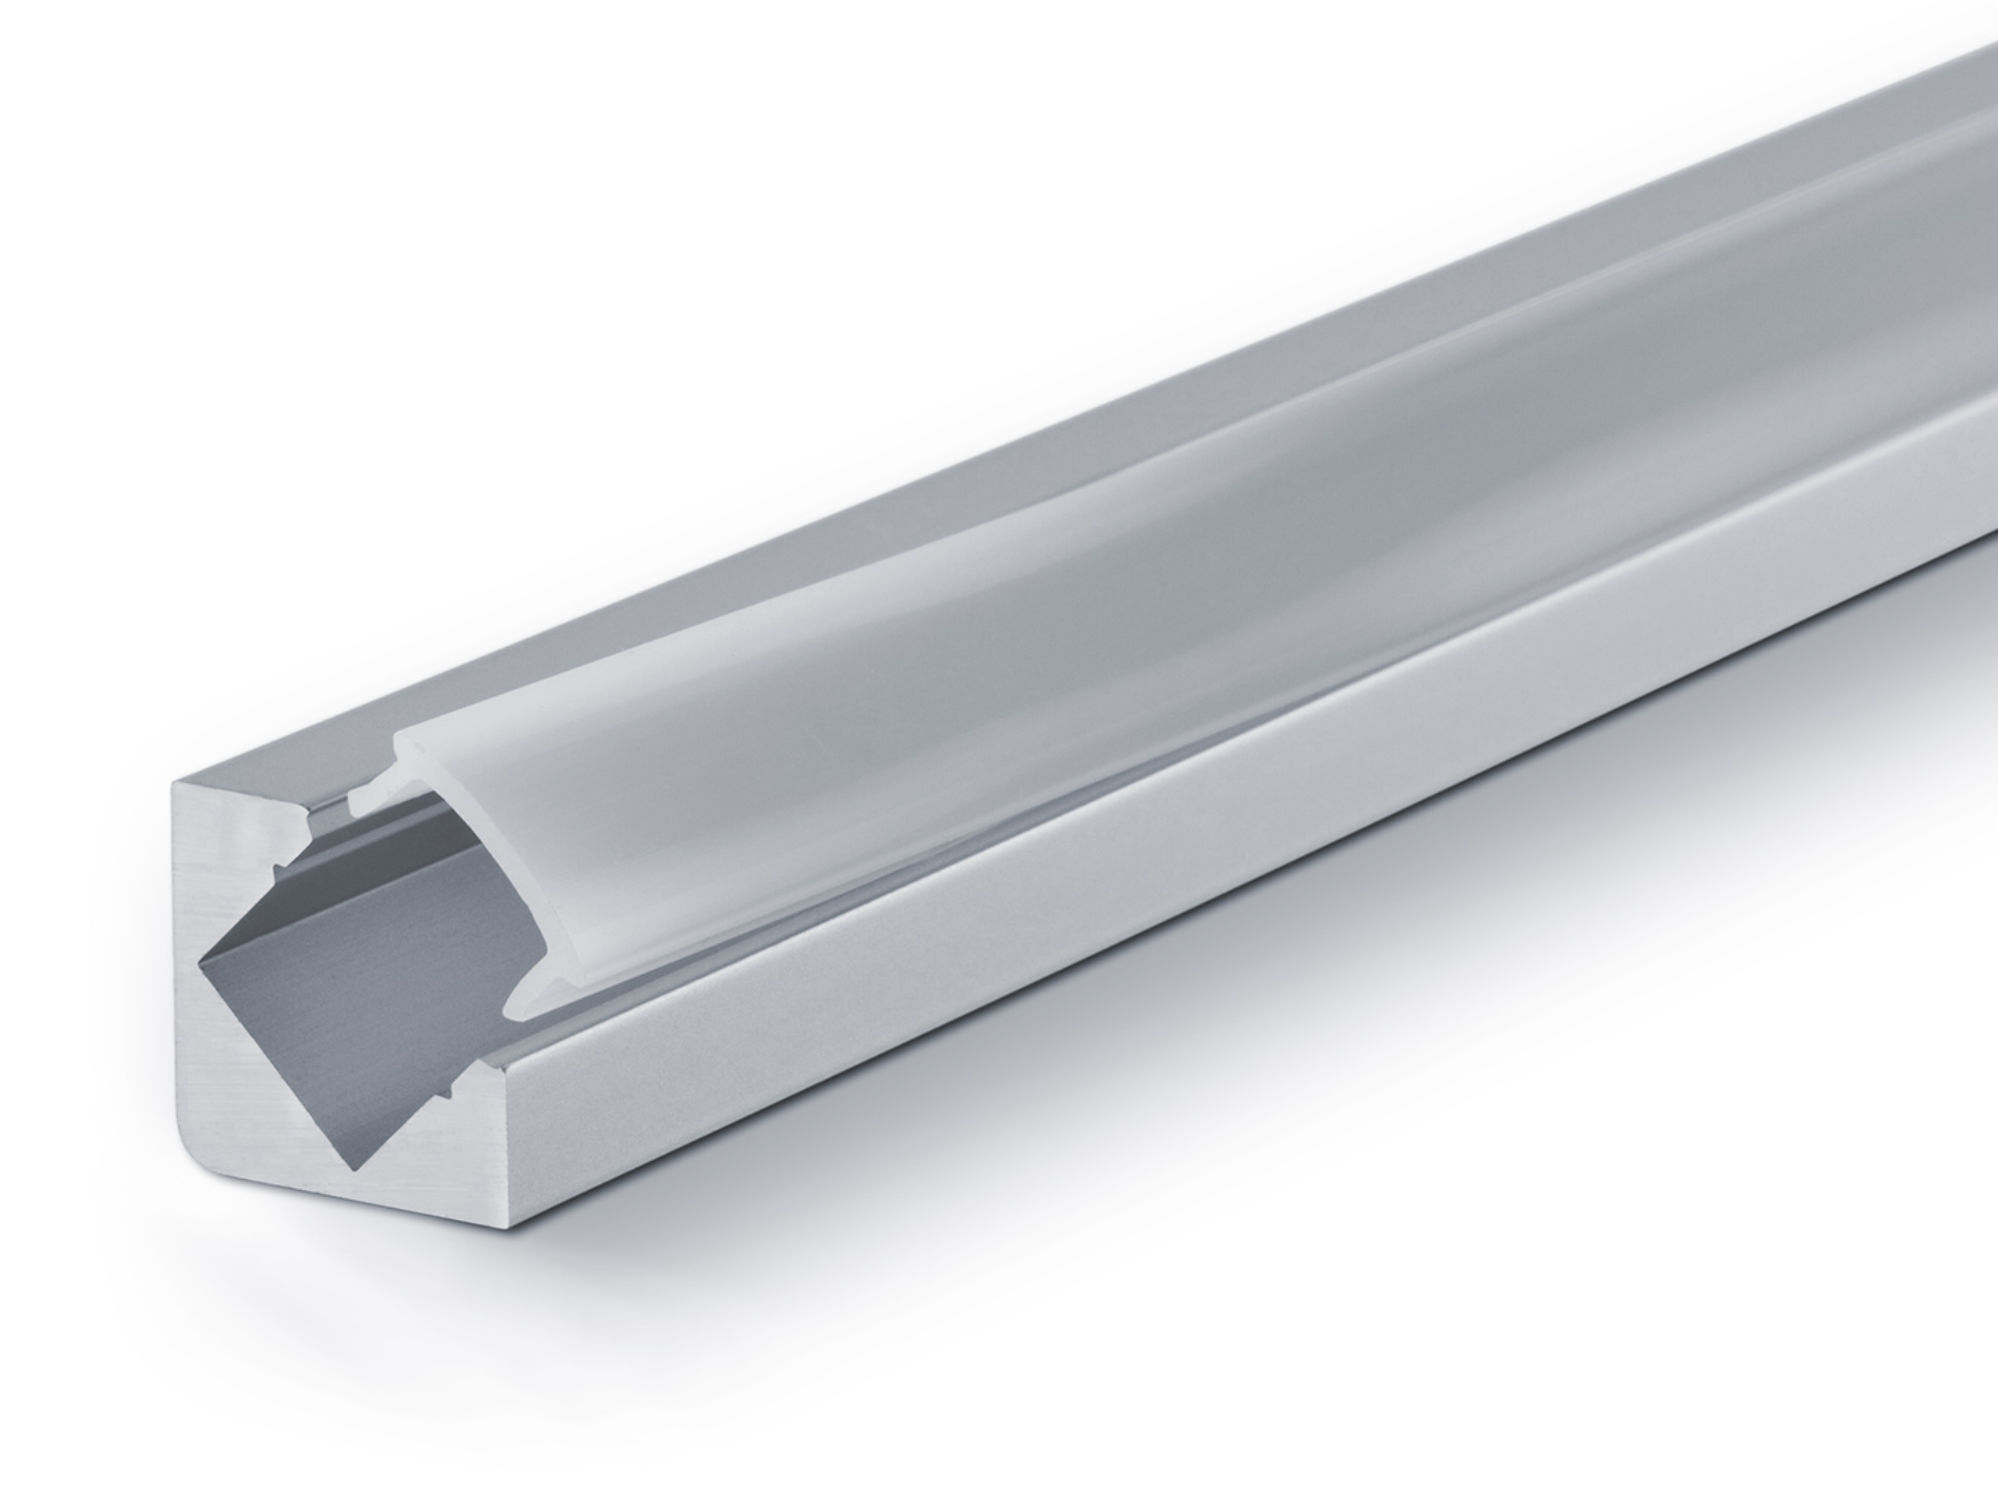 PREMIUM LED Alu 45Grad-Profil silber mit Abdeckung 2m kaufen | PUR-LED